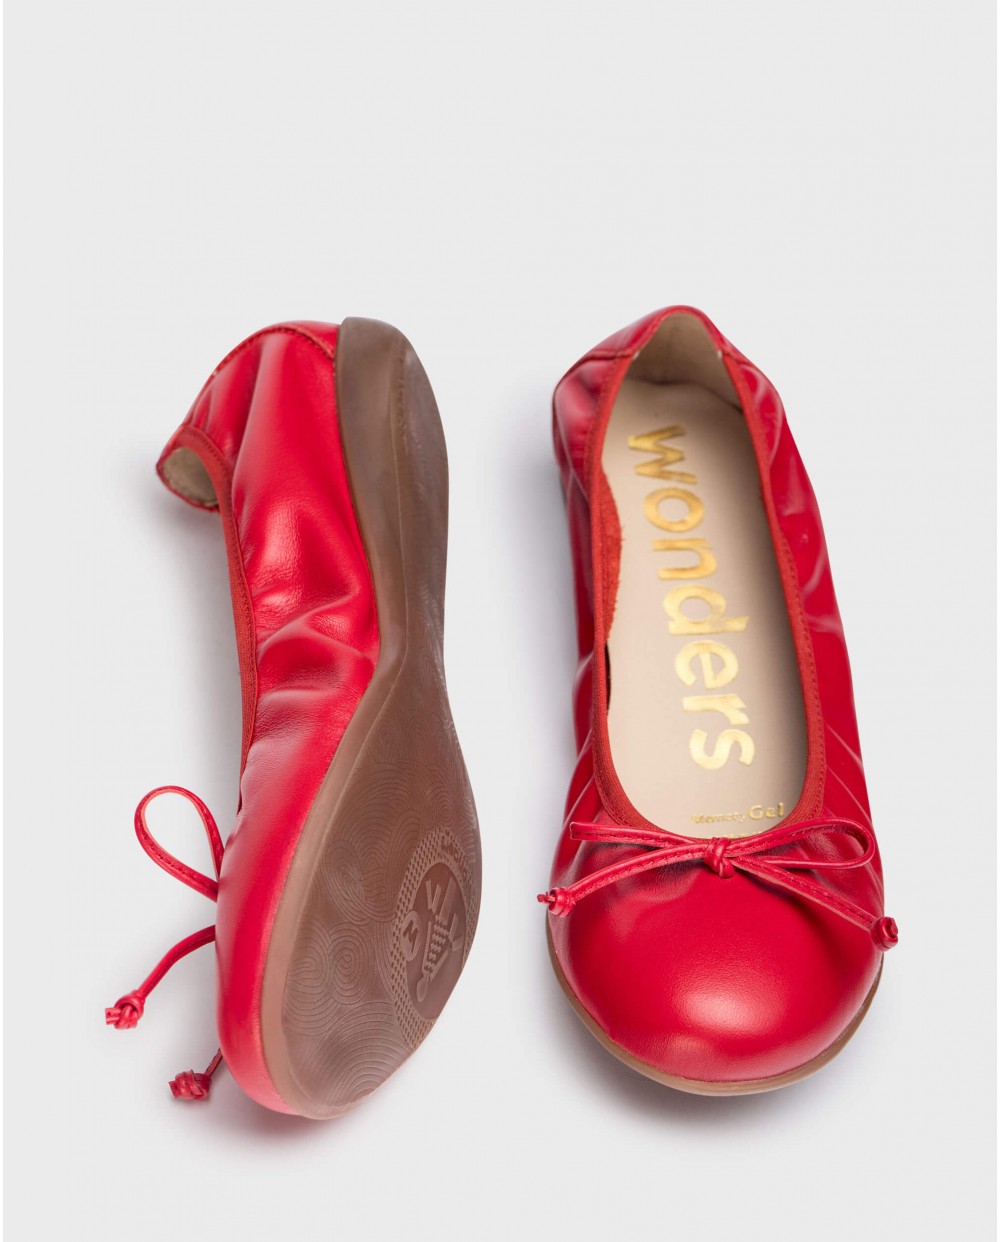 Wonders-Women shoes-Red BO Ballet pump